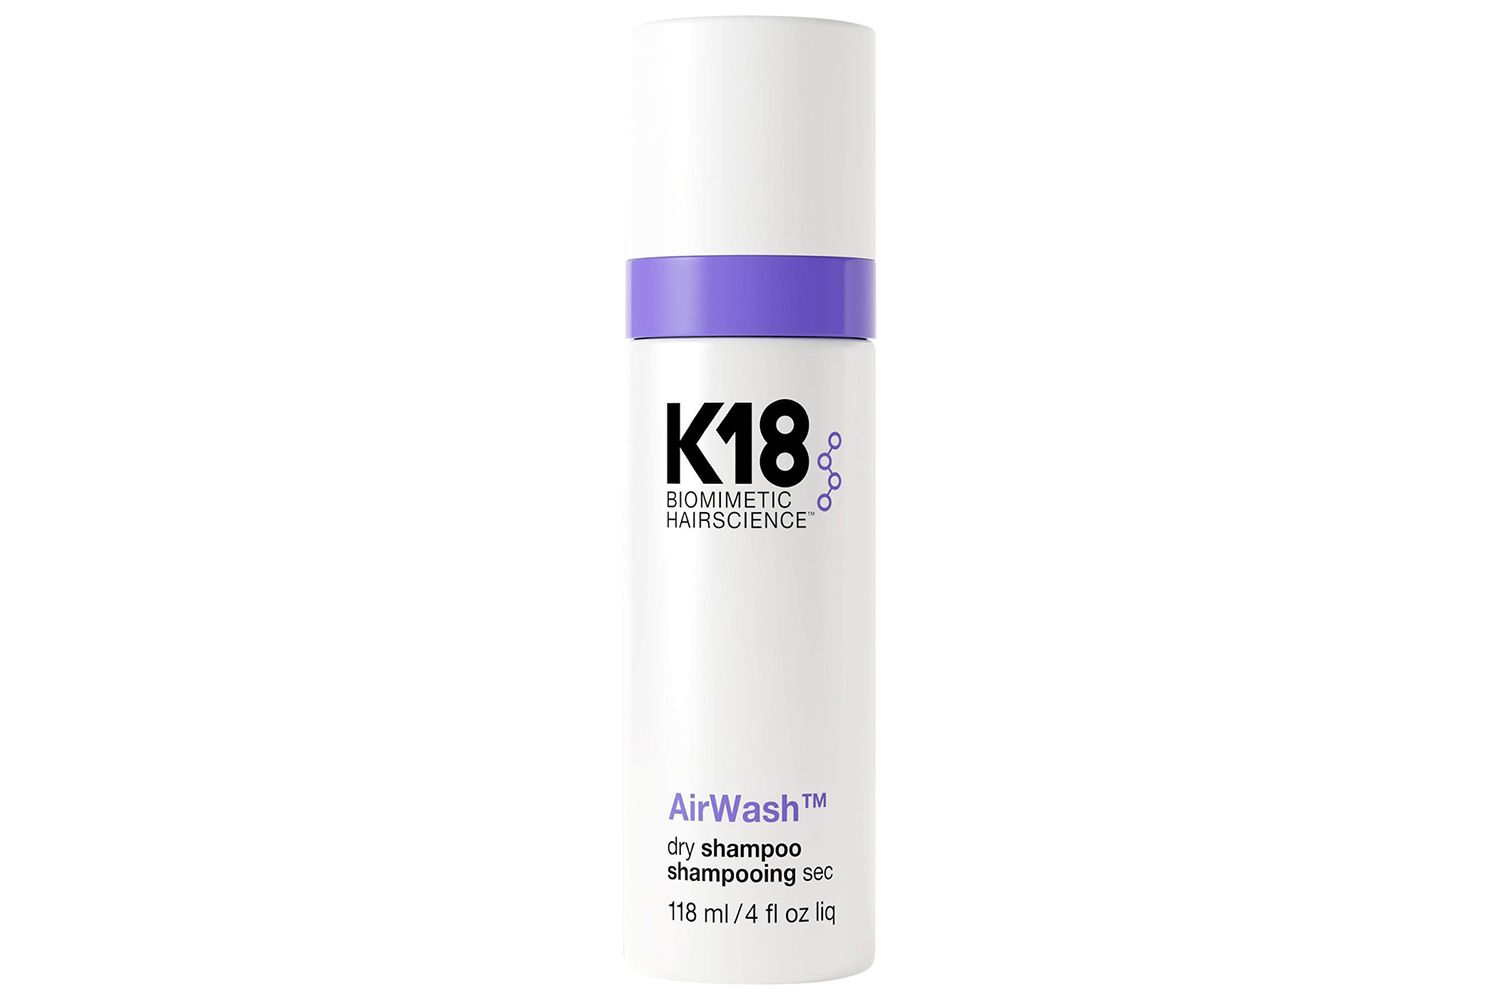 Sephora K18 Biomimetic Hairscience AirWashâ¢ Dry Shampoo